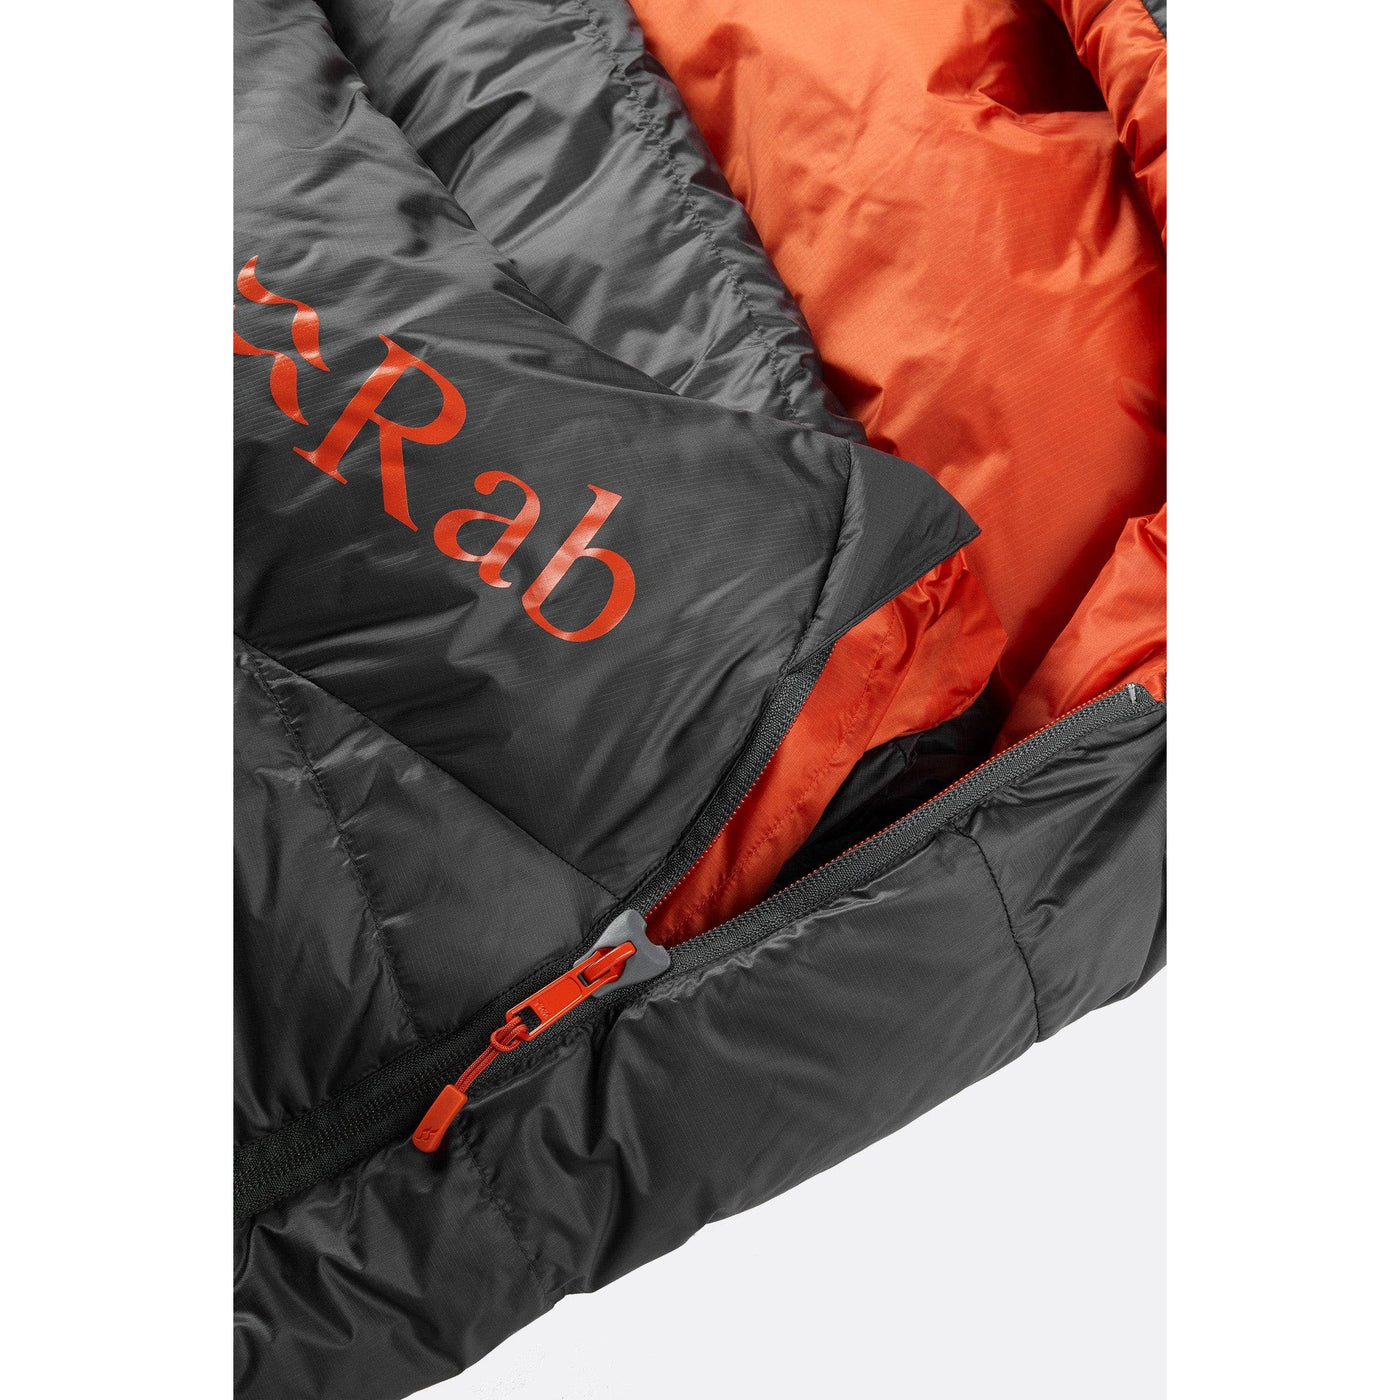 Rab Ascent 500 -5 Sleeping Bag (1060 Grams)